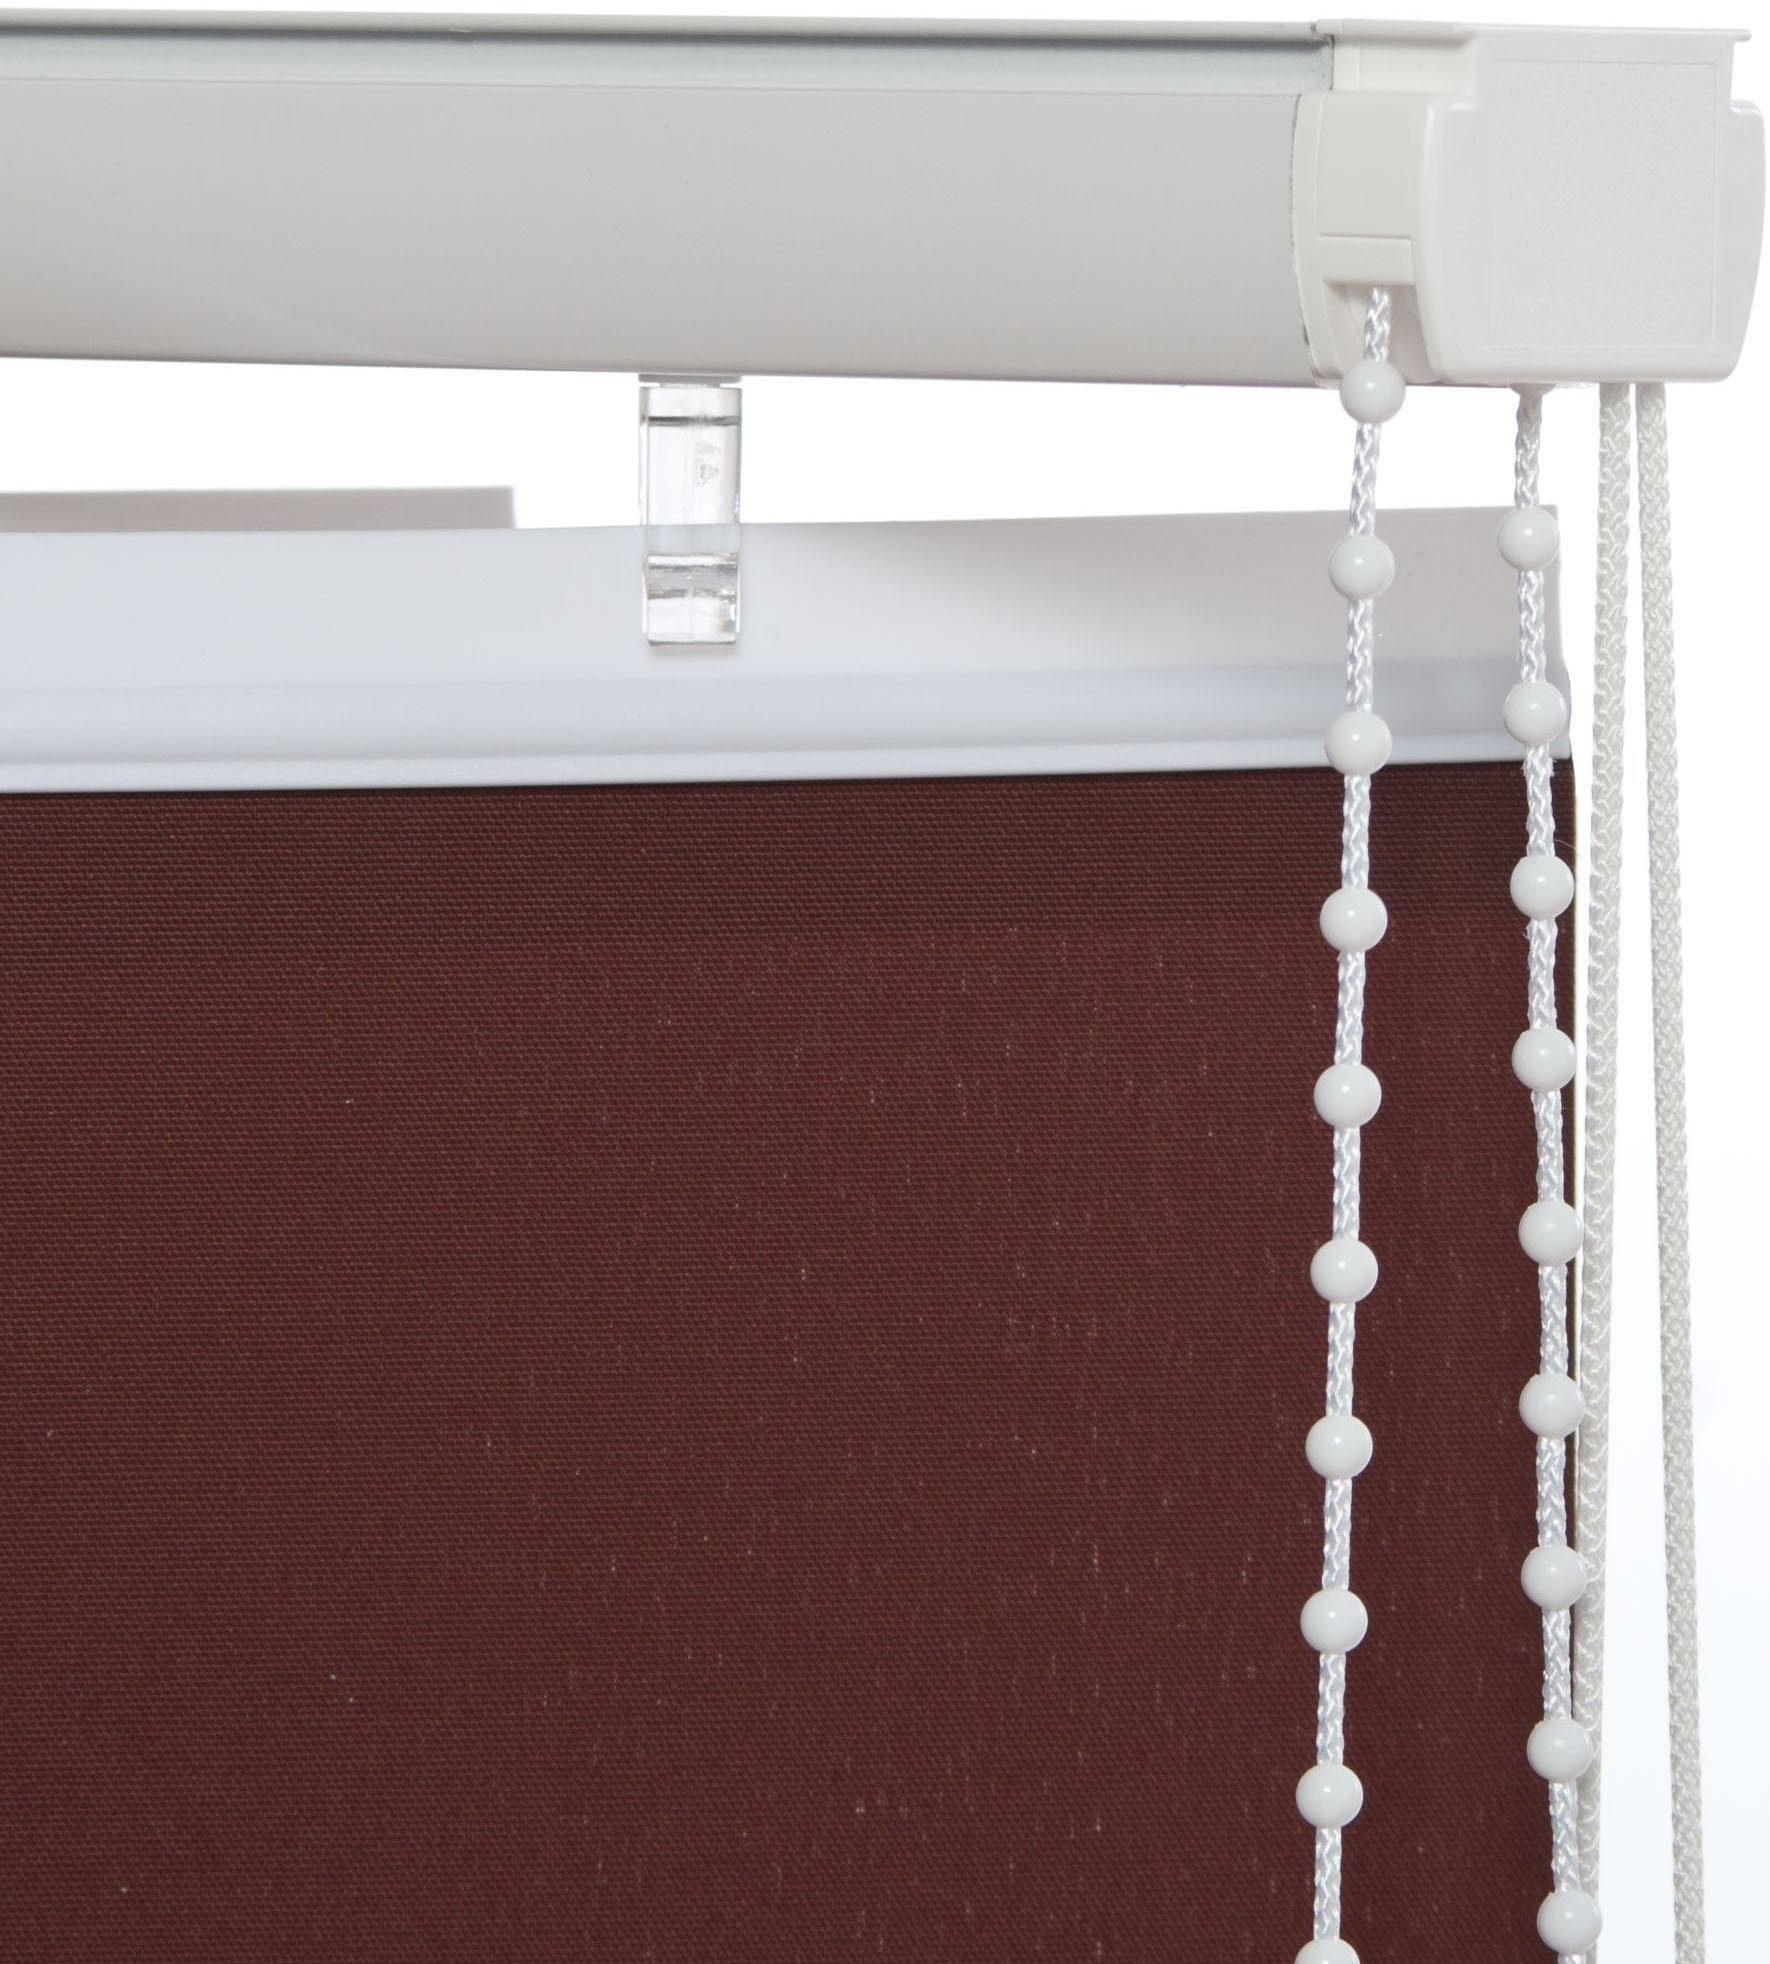 Lamellenvorhang Vertikalanlage 89 mm, Liedeco, mit Bohren, Individuell  kürzbare Lamellen. Anleitung zum Kürzen liegt dem Produkt